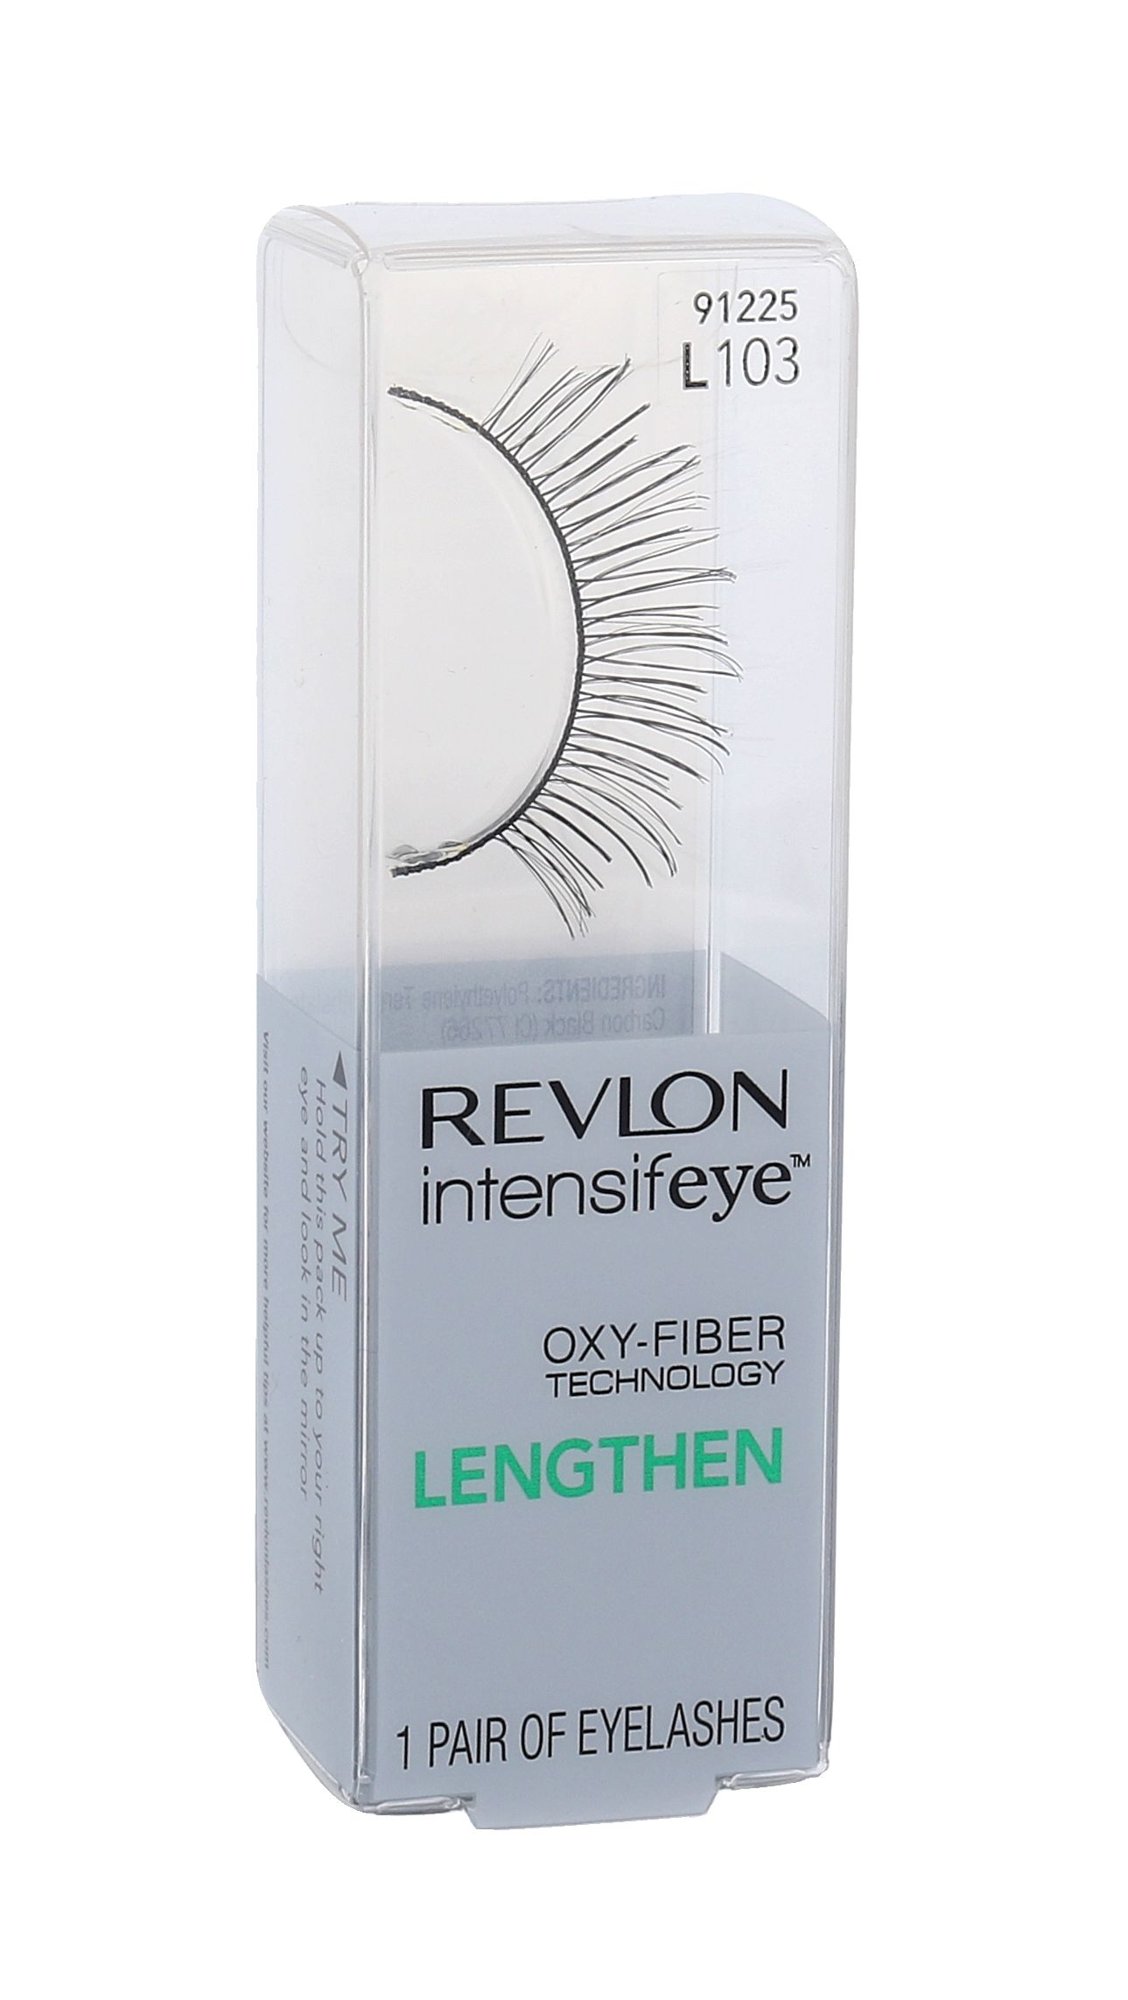 Revlon Lengthen Intensifeye Oxy-Fiber Technology dirbtinės blakstienos